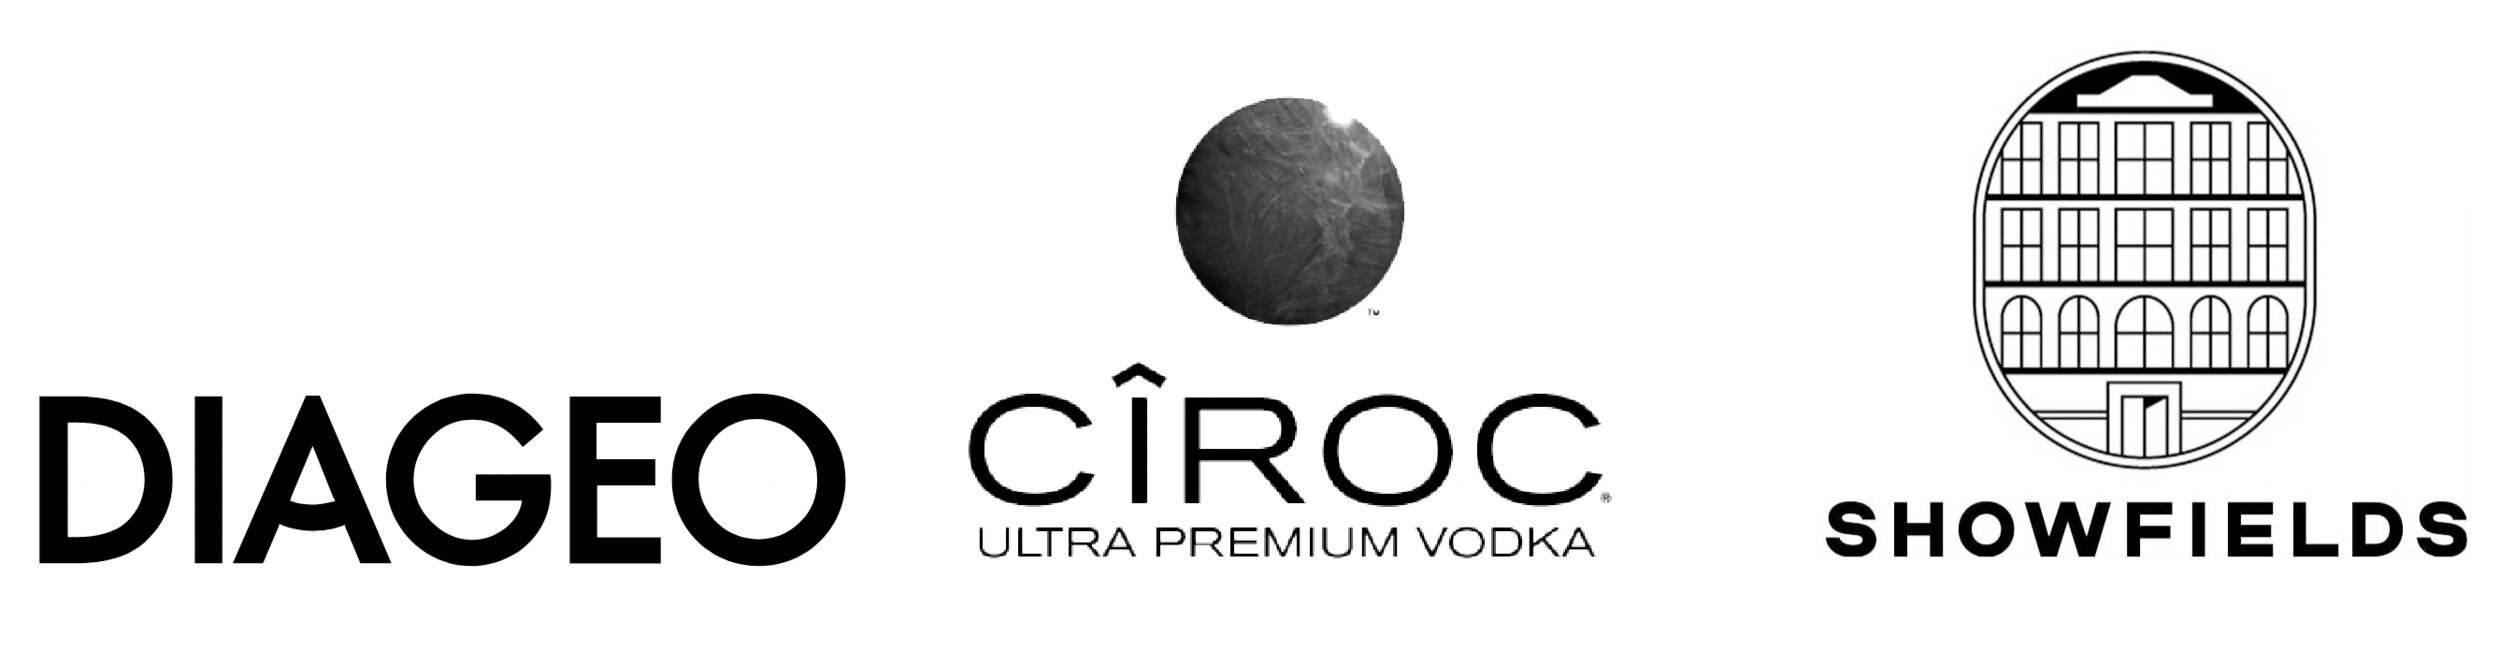 Ciroc Premium French Vodka Wall Art Print 